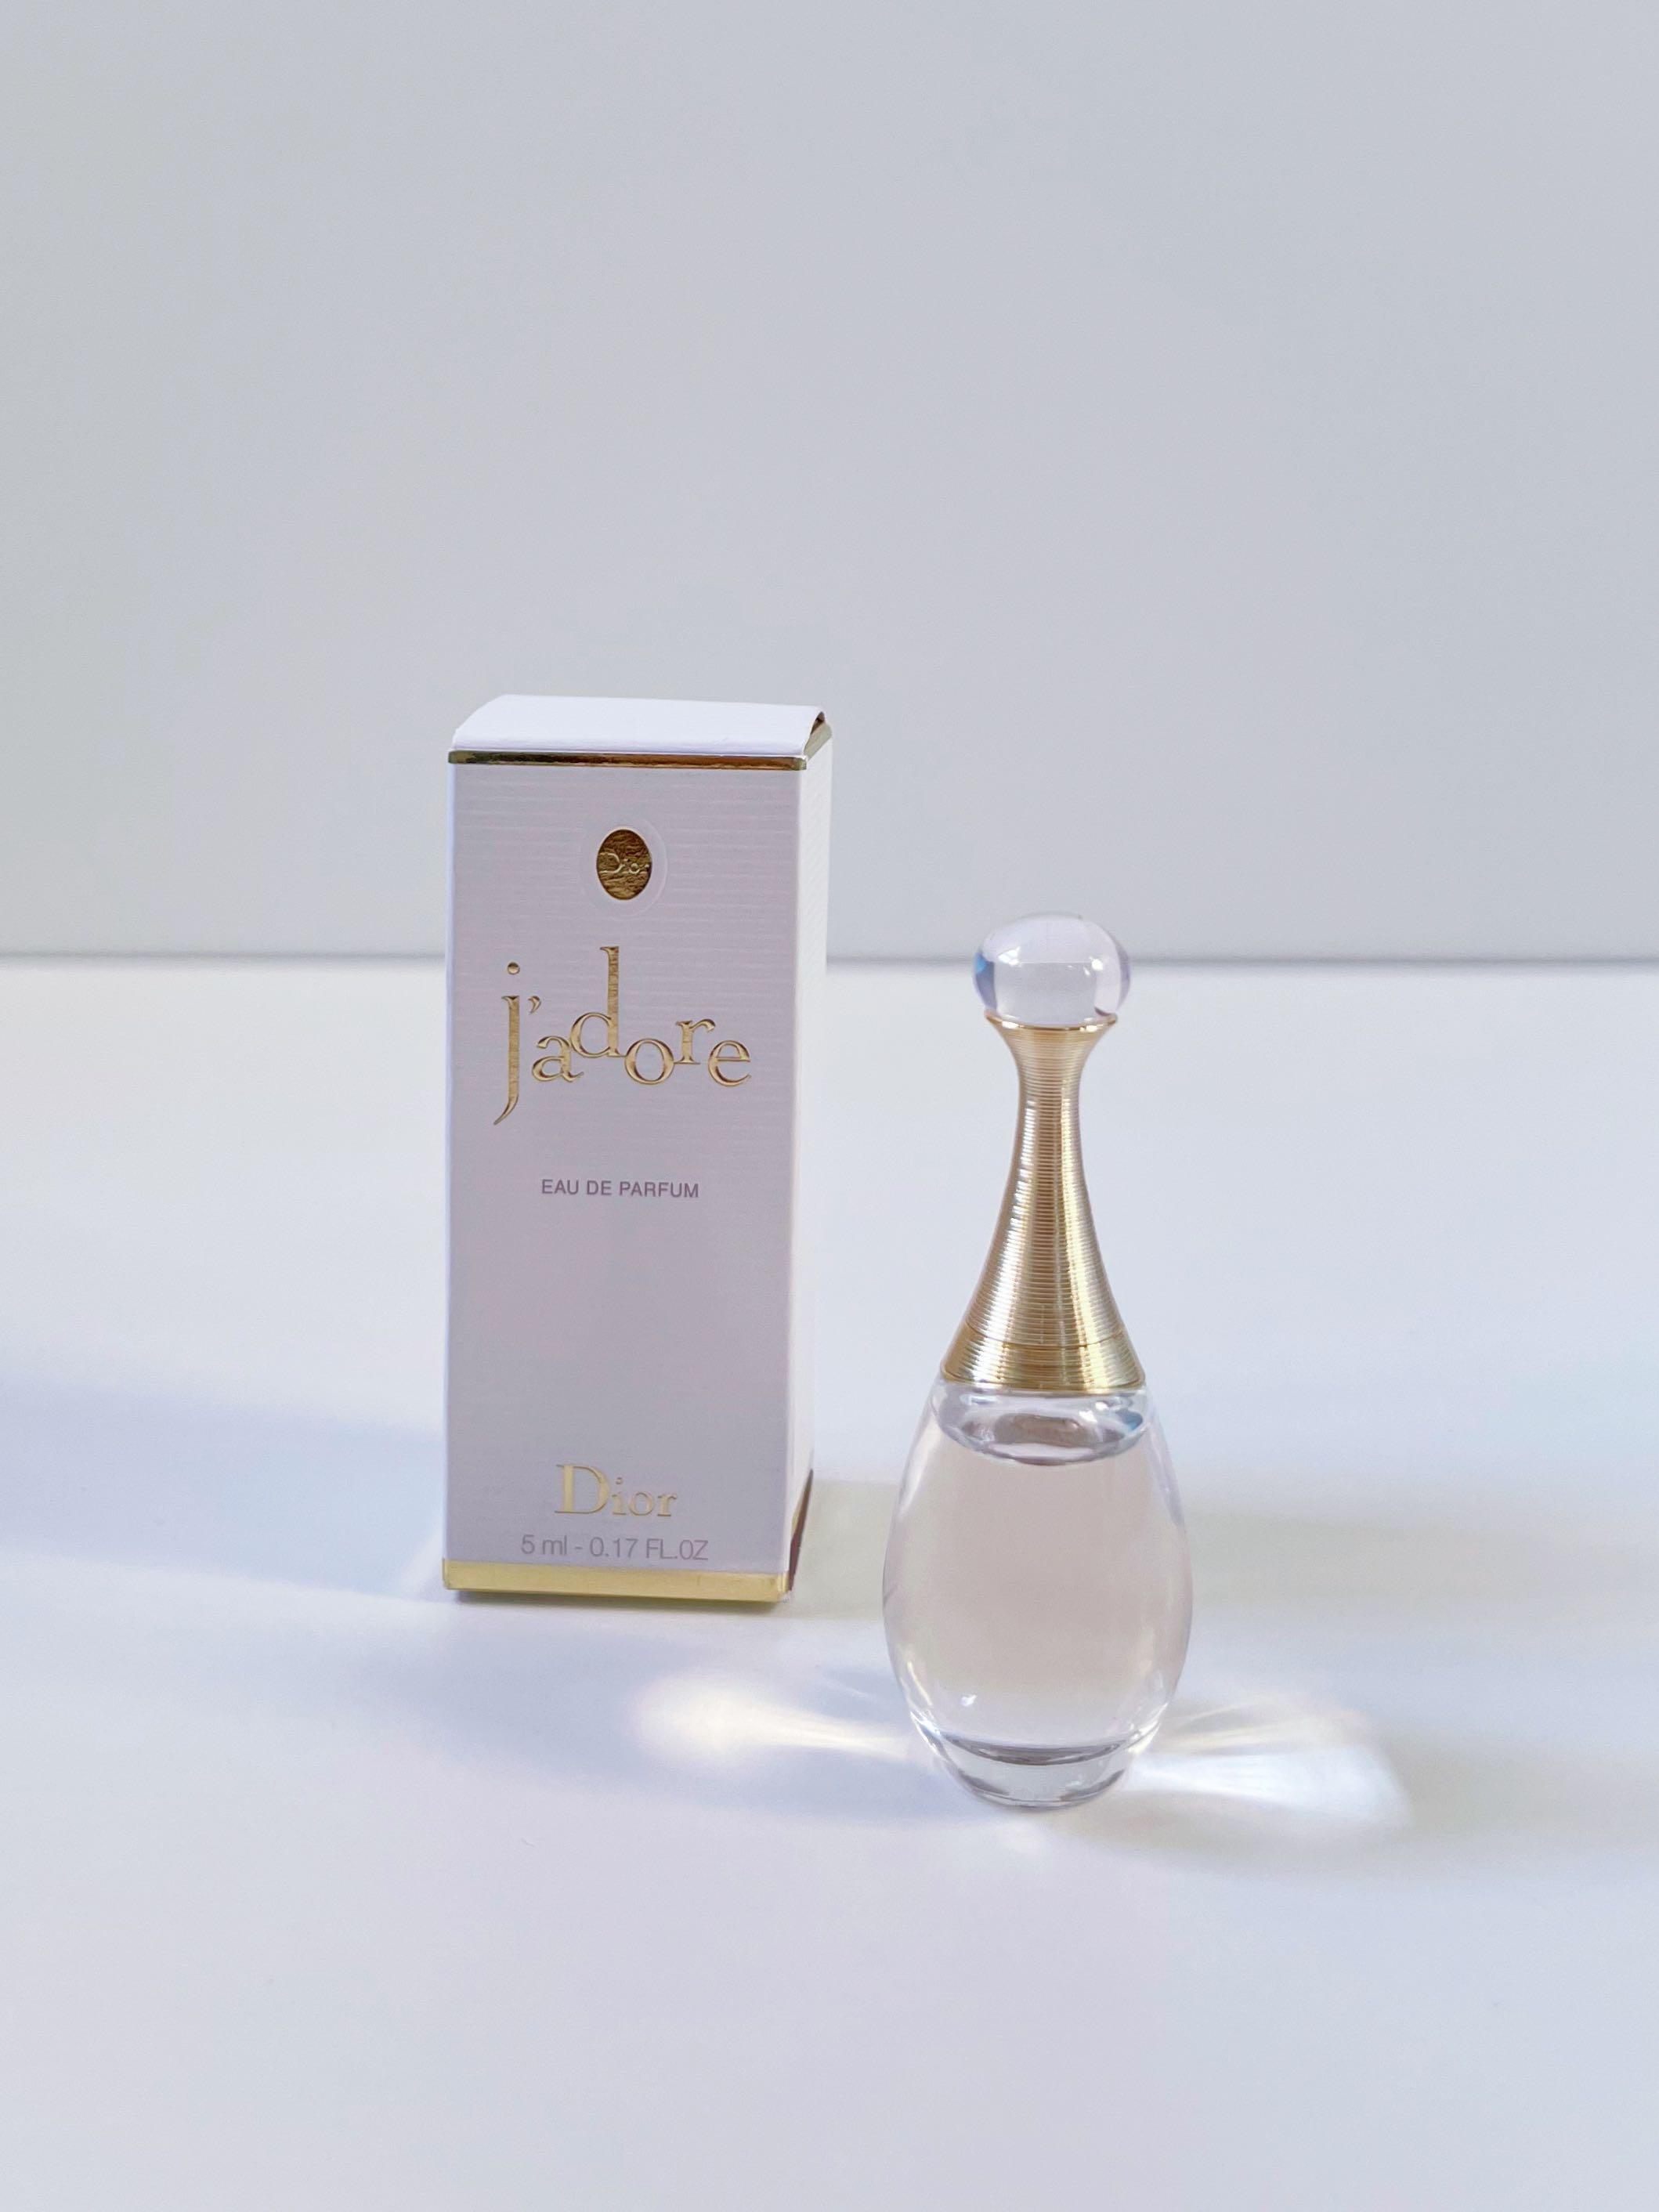 bom Anoi ga werken Raya Promotion Disocunt) Dior Jadore Eau De Parfum 5ml Miniature 100%  Authentic, Health & Beauty, Perfumes, Nail Care, & Others on Carousell